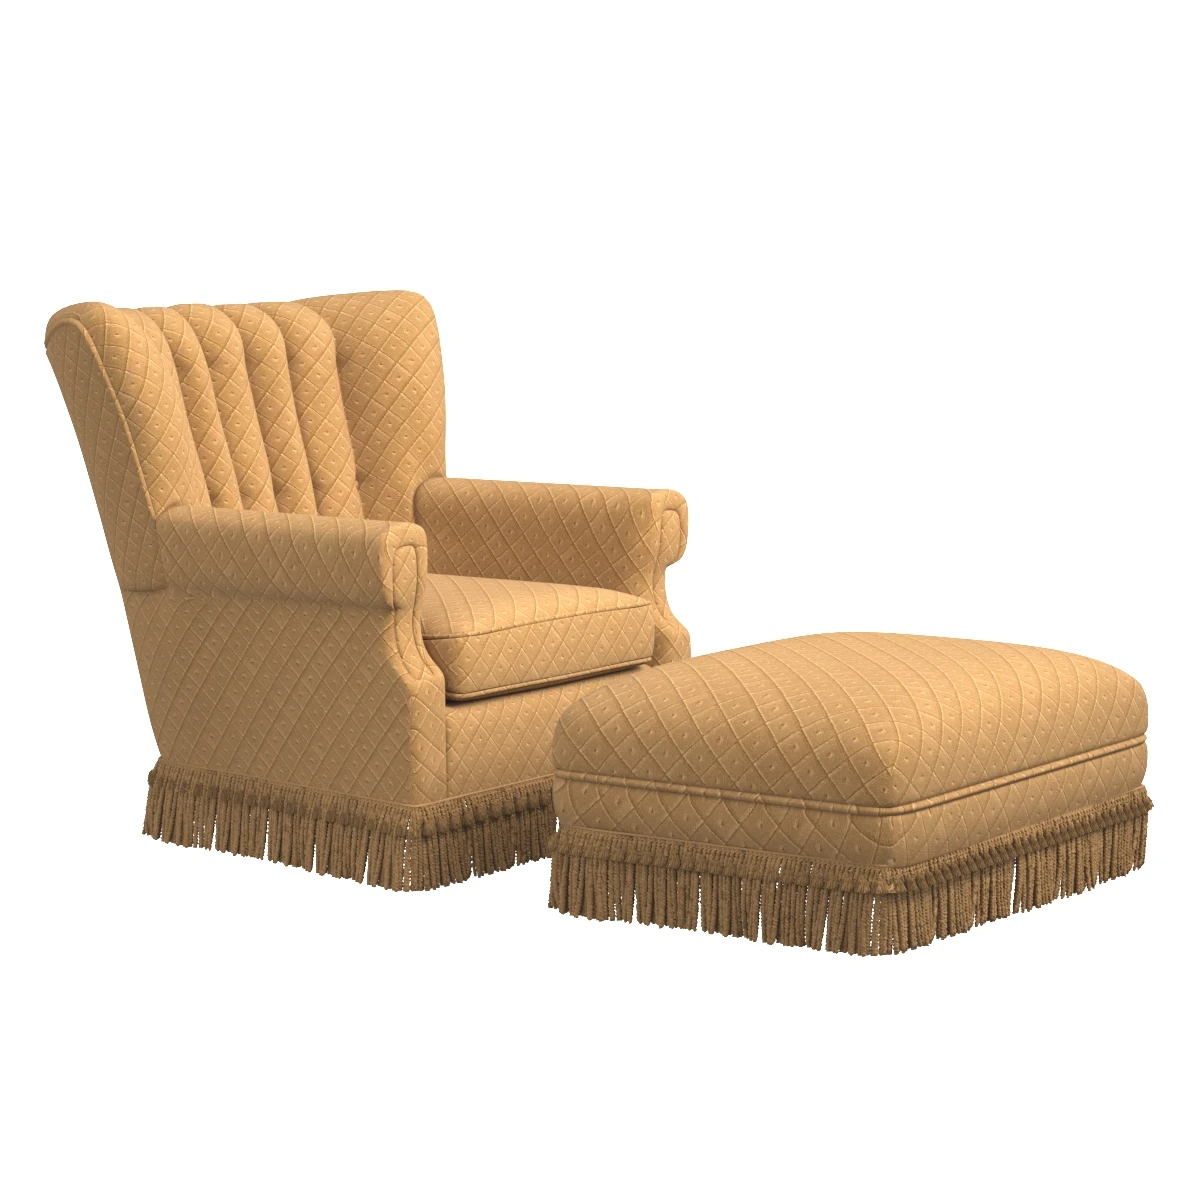 Art Deco Club Chair and Ottoman by Swaim 3D Model_01